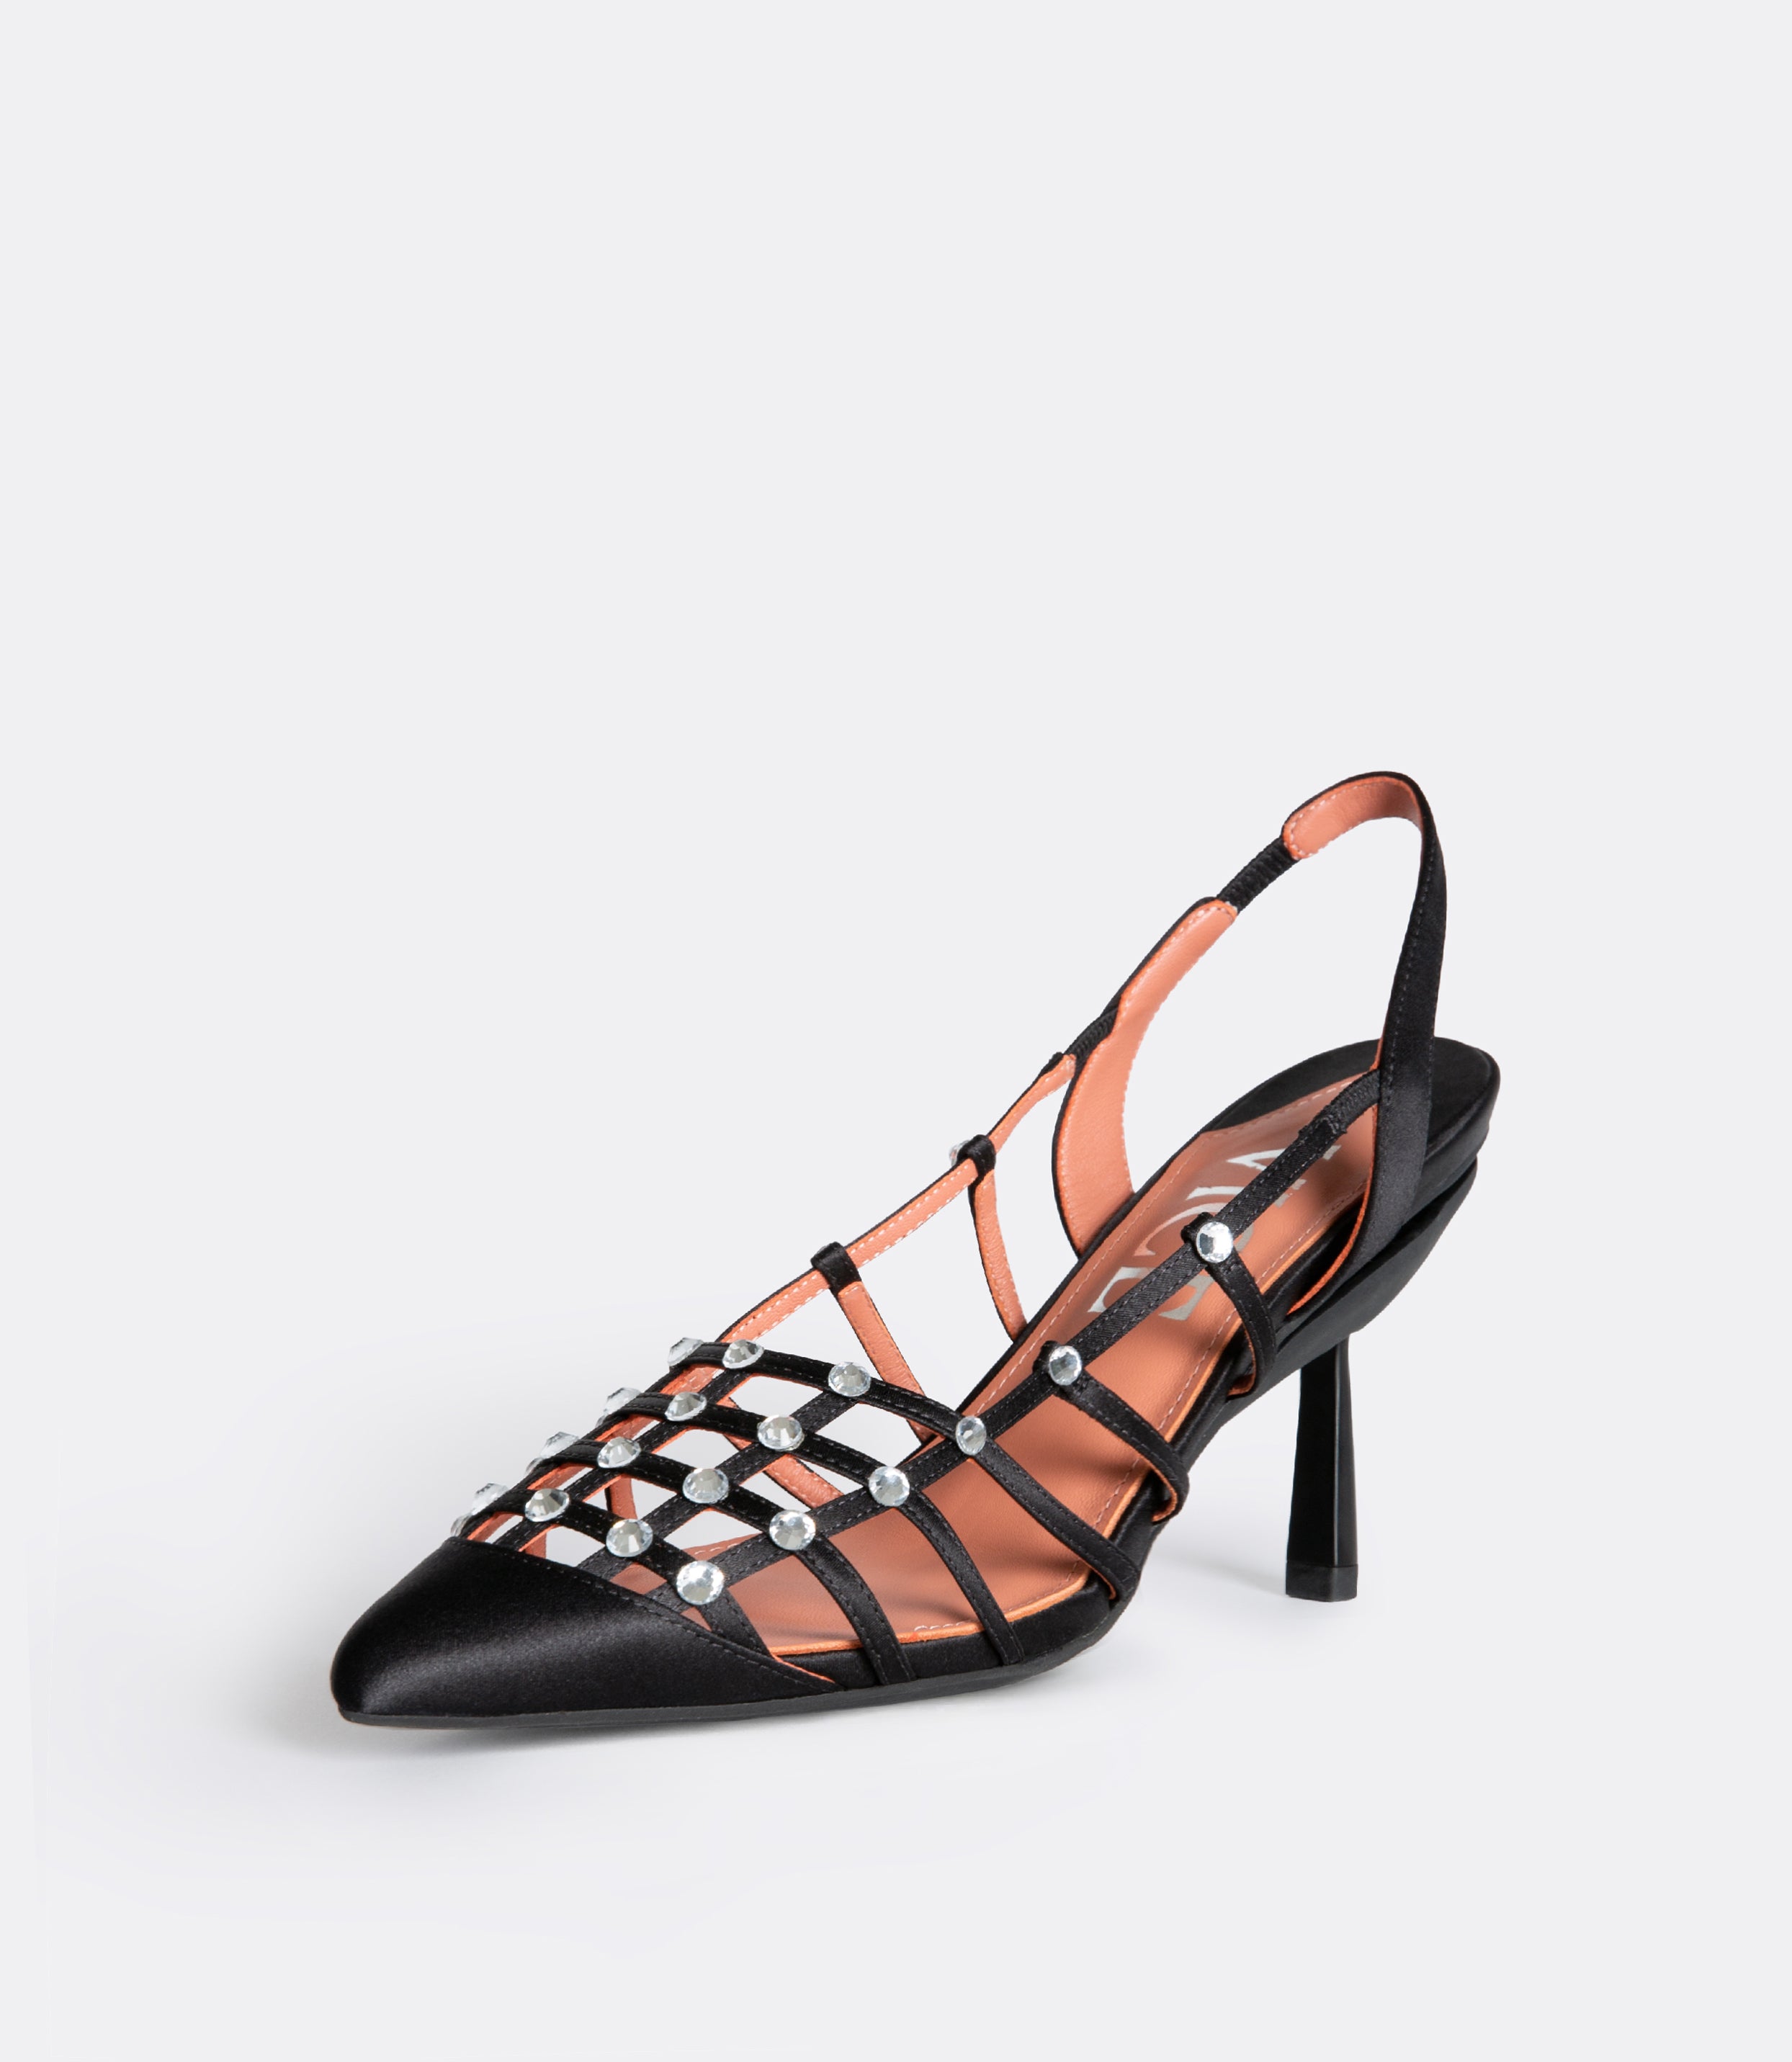 Buy Black Shoes For Women For Work Heels online | Lazada.com.ph